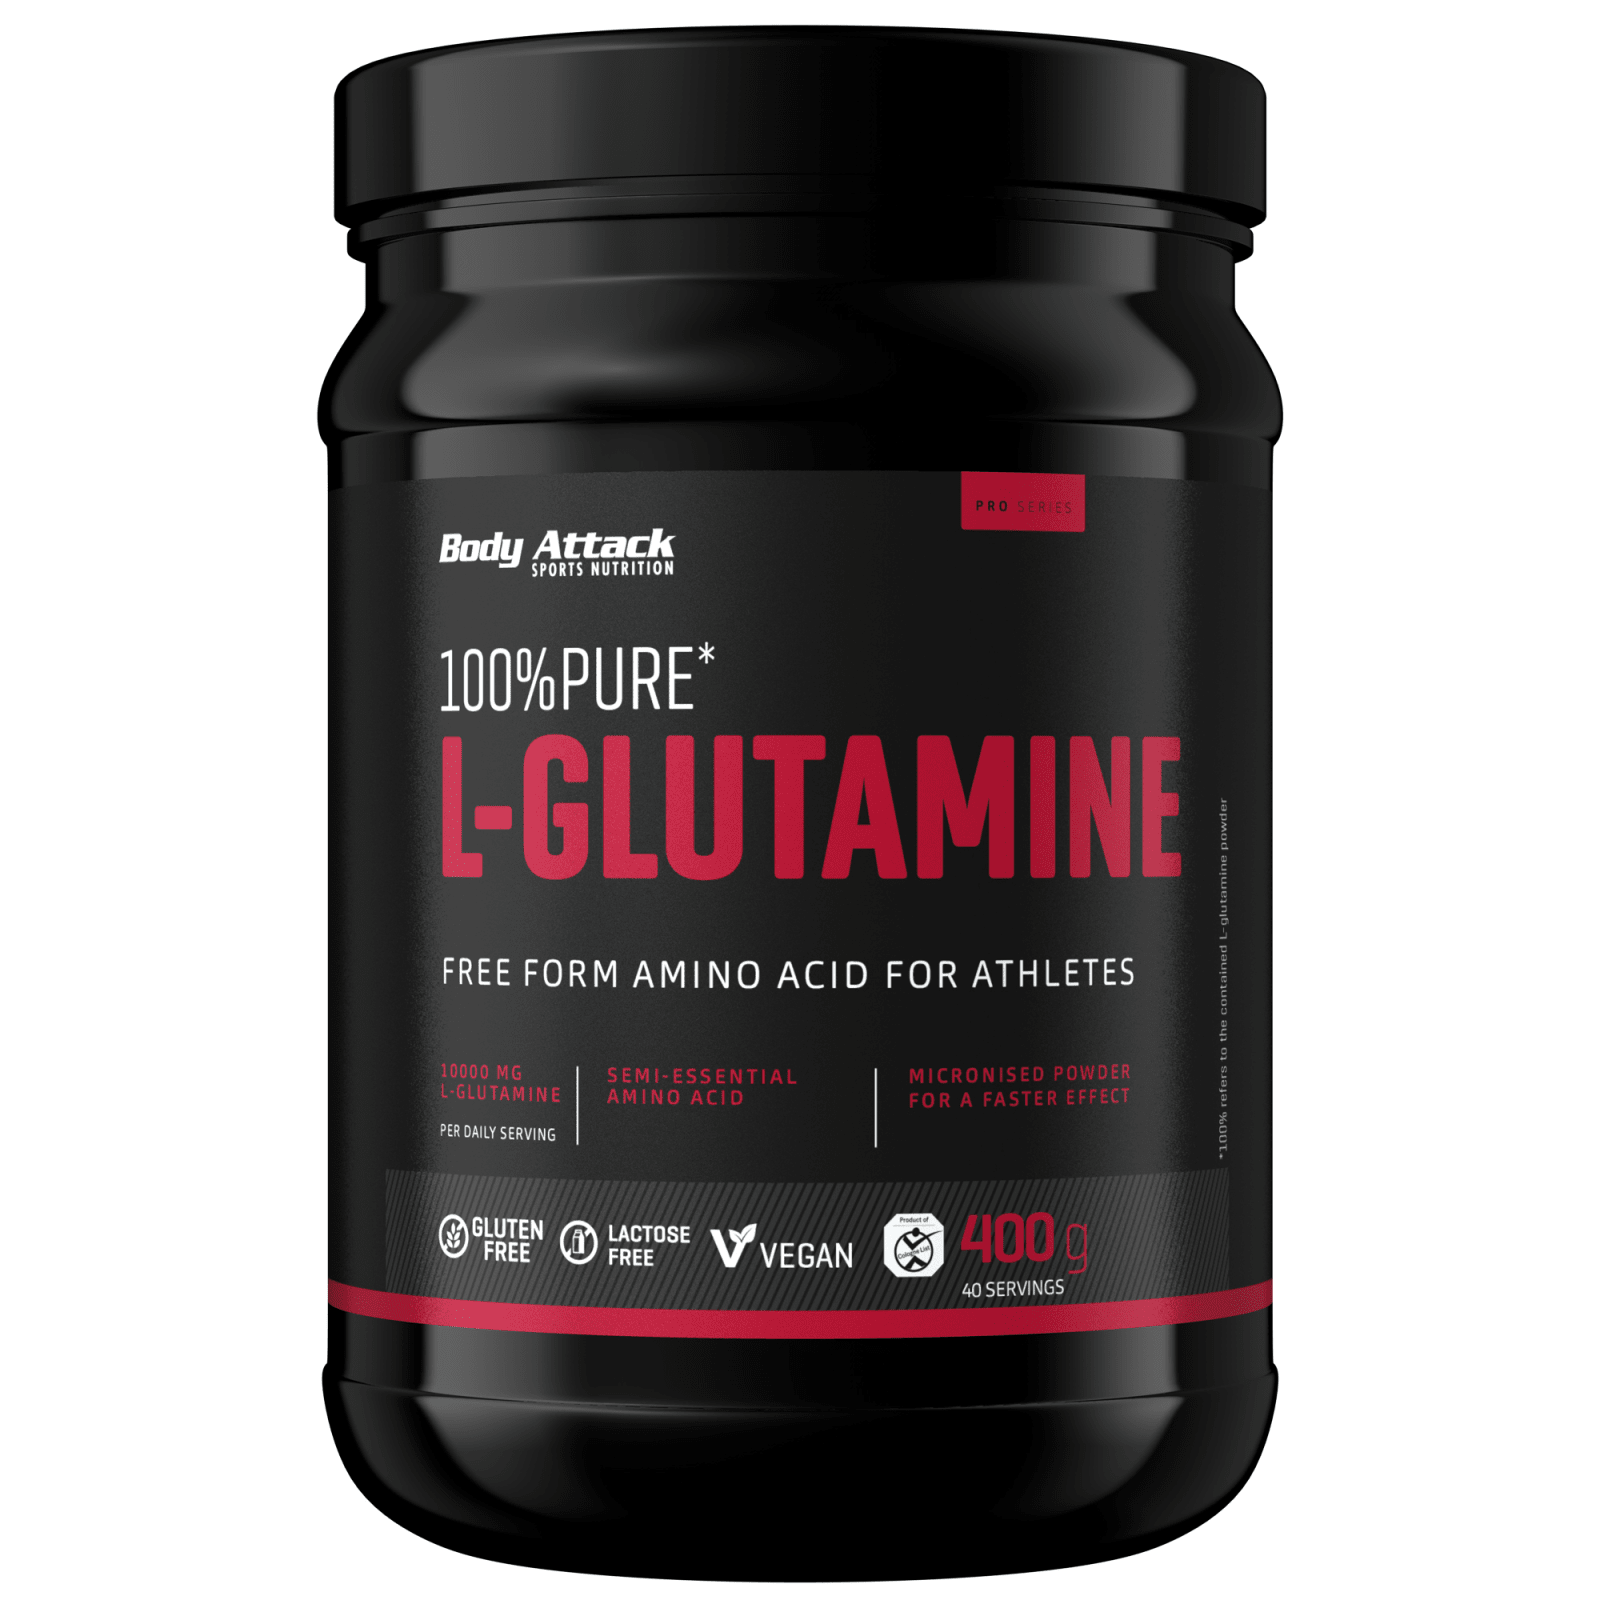 Л глютамин купить. 100% L-Glutamine. Аминокислота Pure Protein l-Glutamine. L-Glutamine extreme 400 г. L-Glutamine Amino acid.